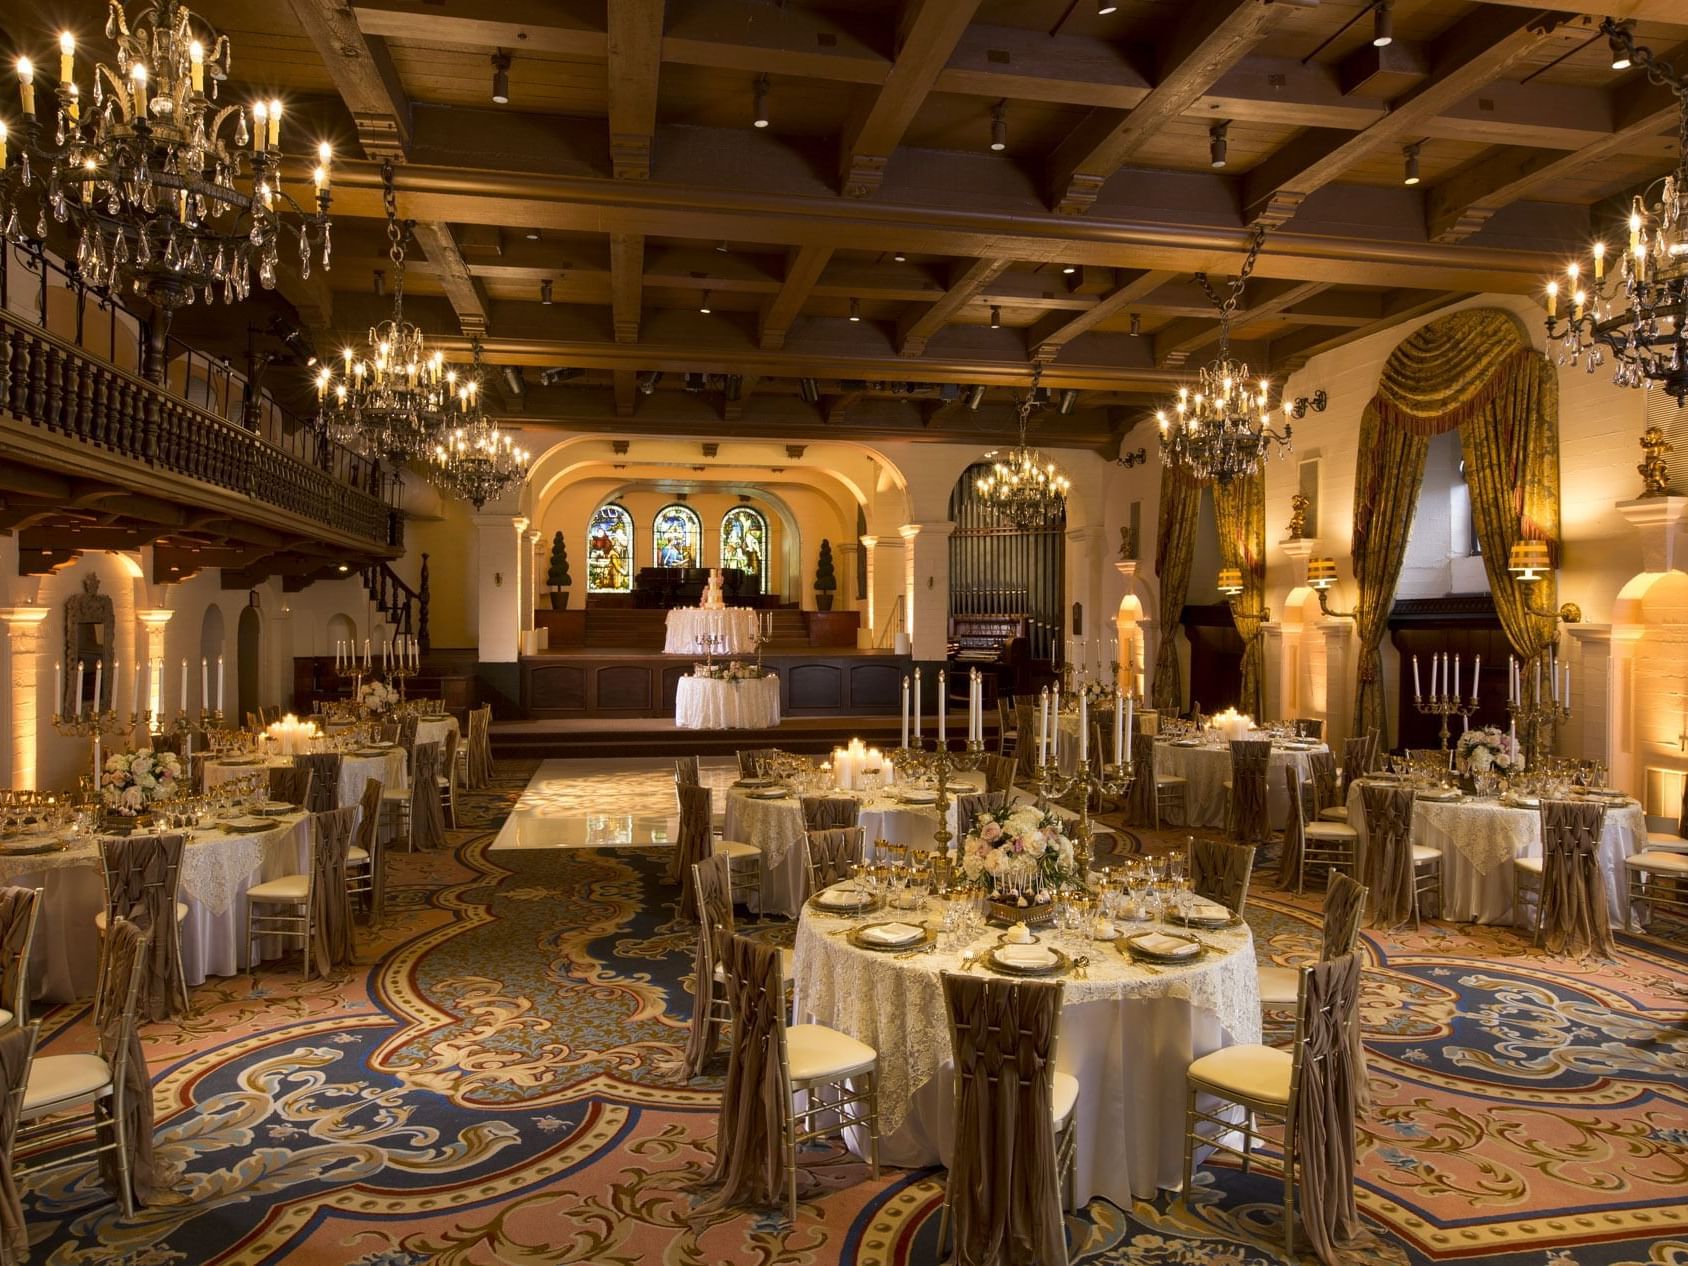 Banquet table setup in ballroom at Mission Inn Riverside